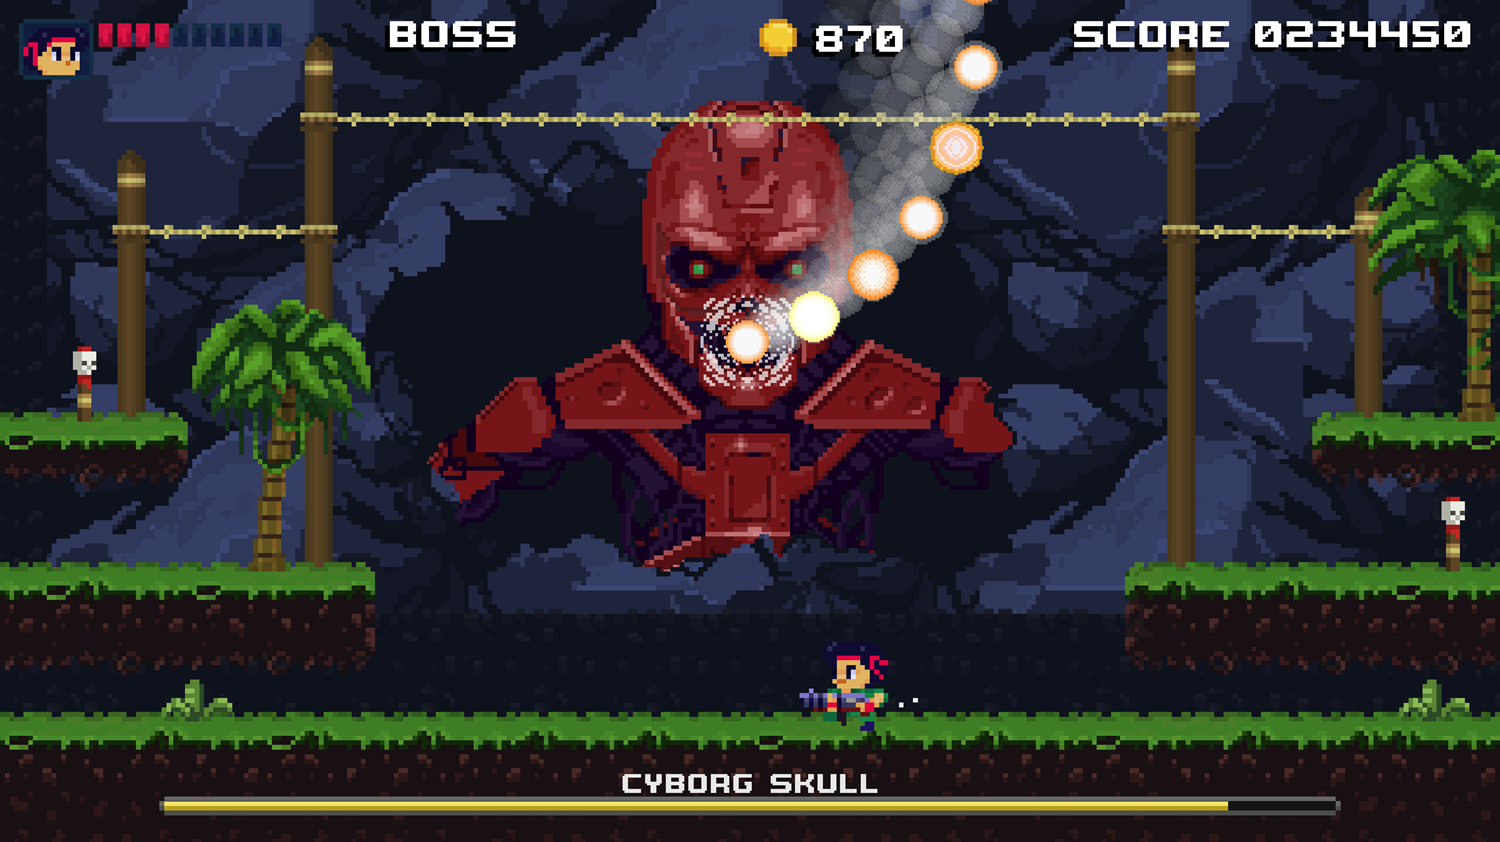 Brave Soldier Invasion of Cyborgs Game Cyborg Skull Amber Attack Screenshot.